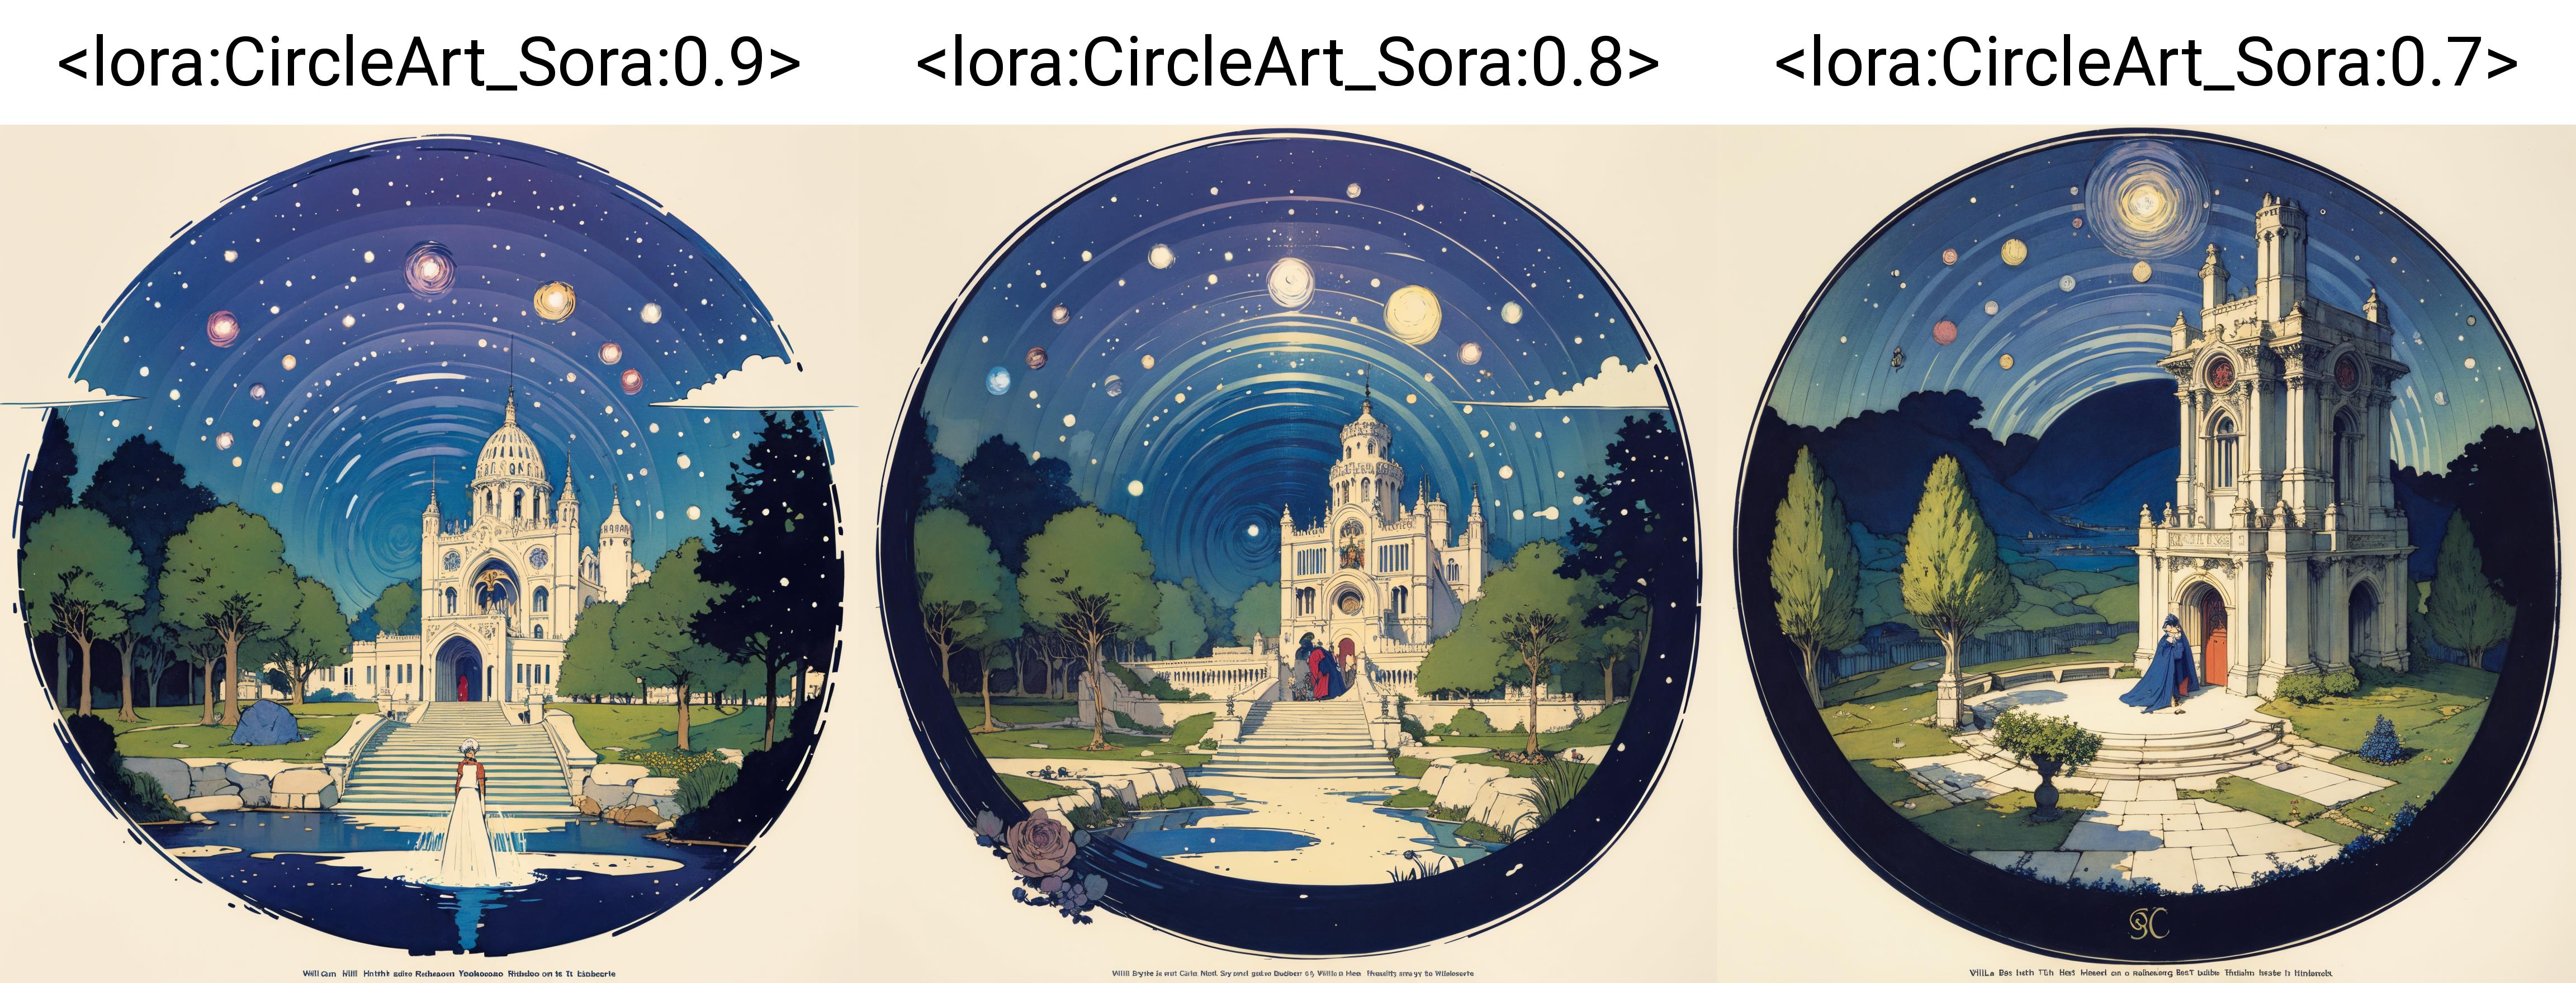 Circle Art | Concept Magic image by SoraSleep